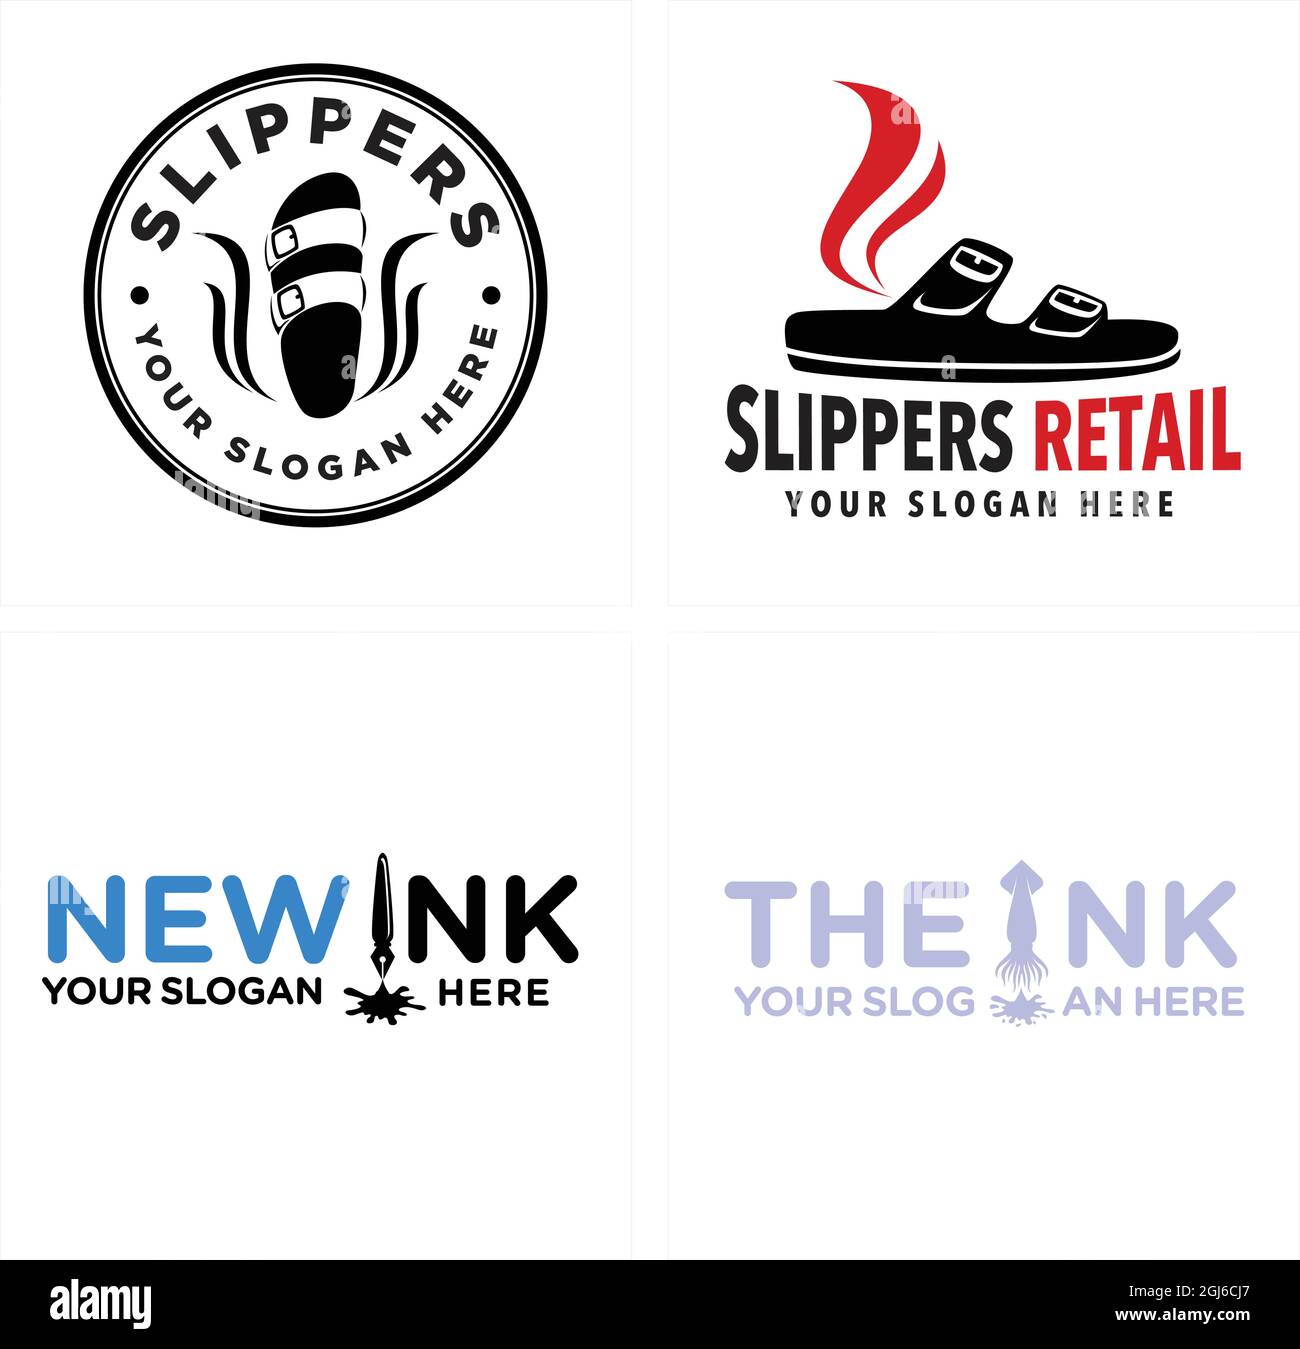 Retail store slippers logo design Stock Vector Image & Art - Alamy